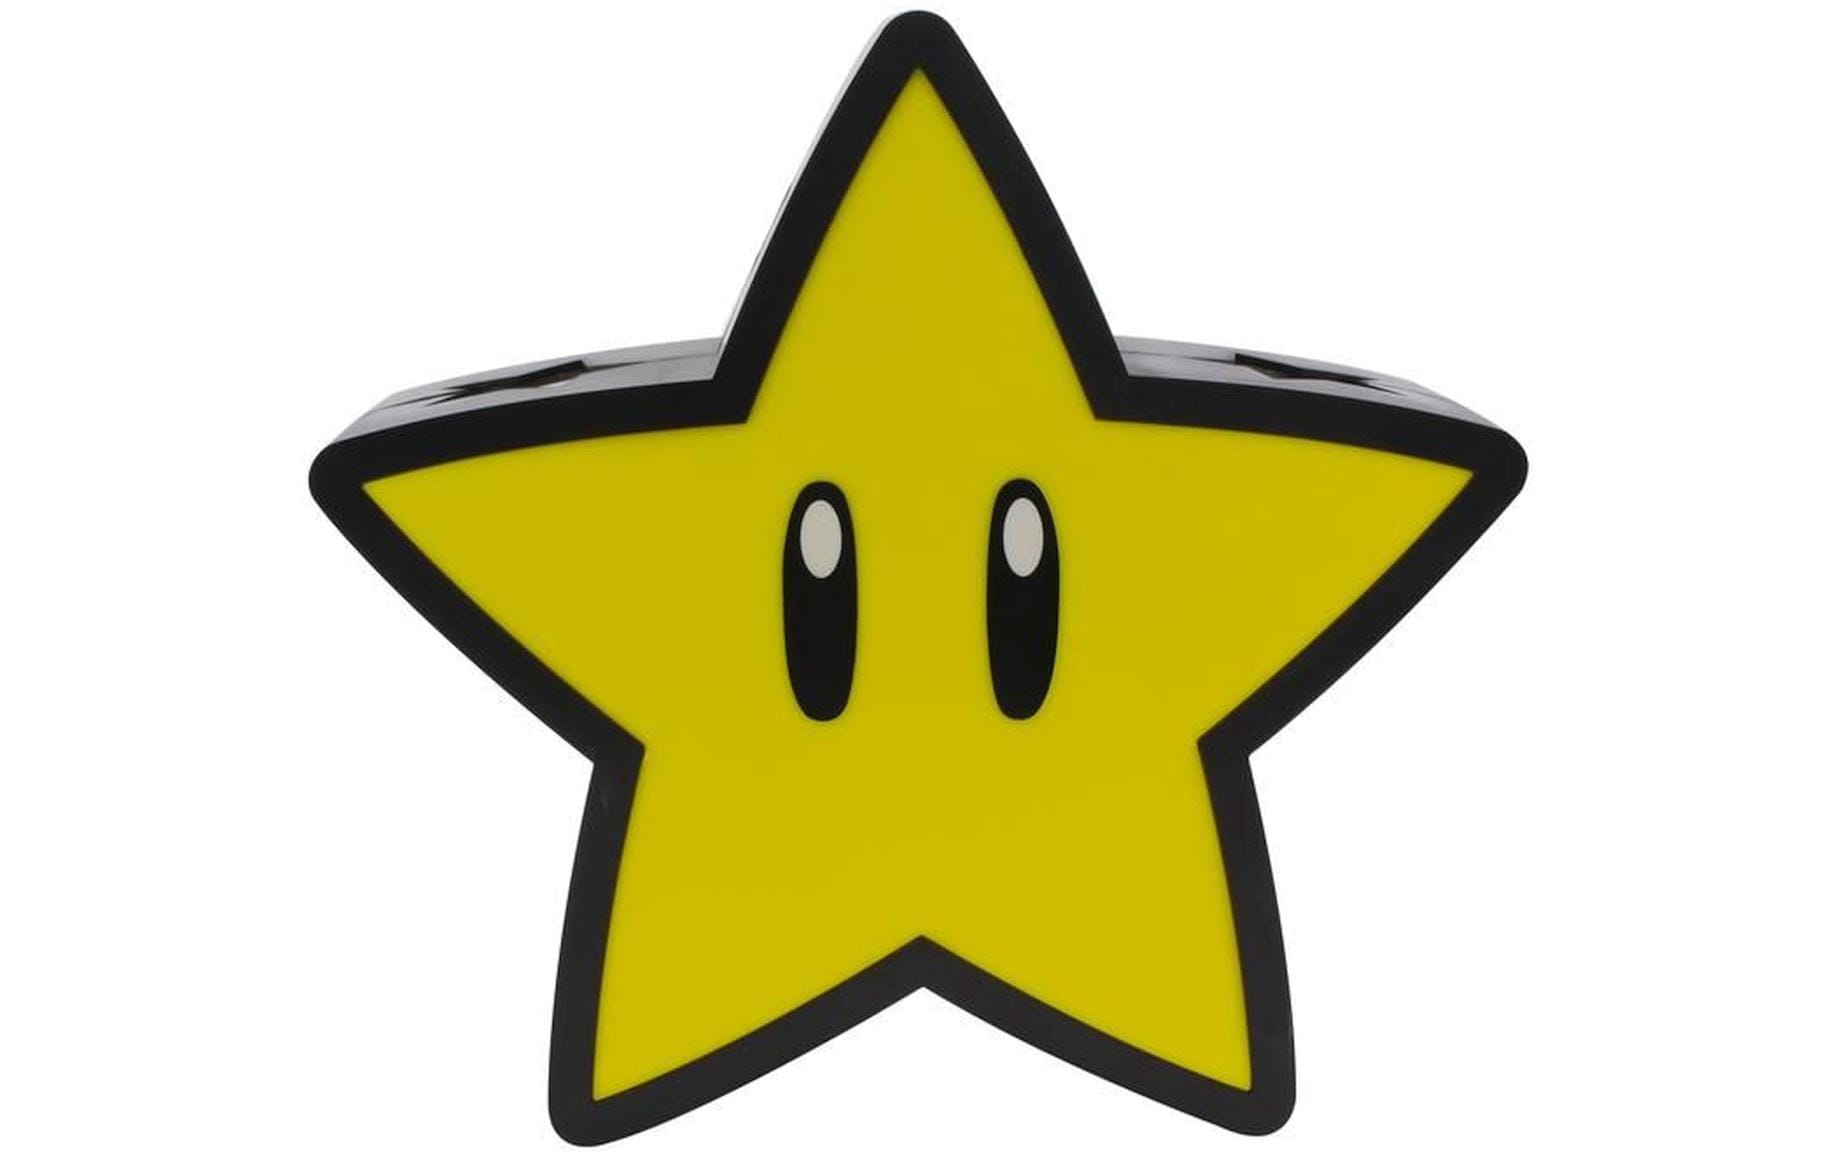 Paladone Dekoleuchte Super Mario Super Star